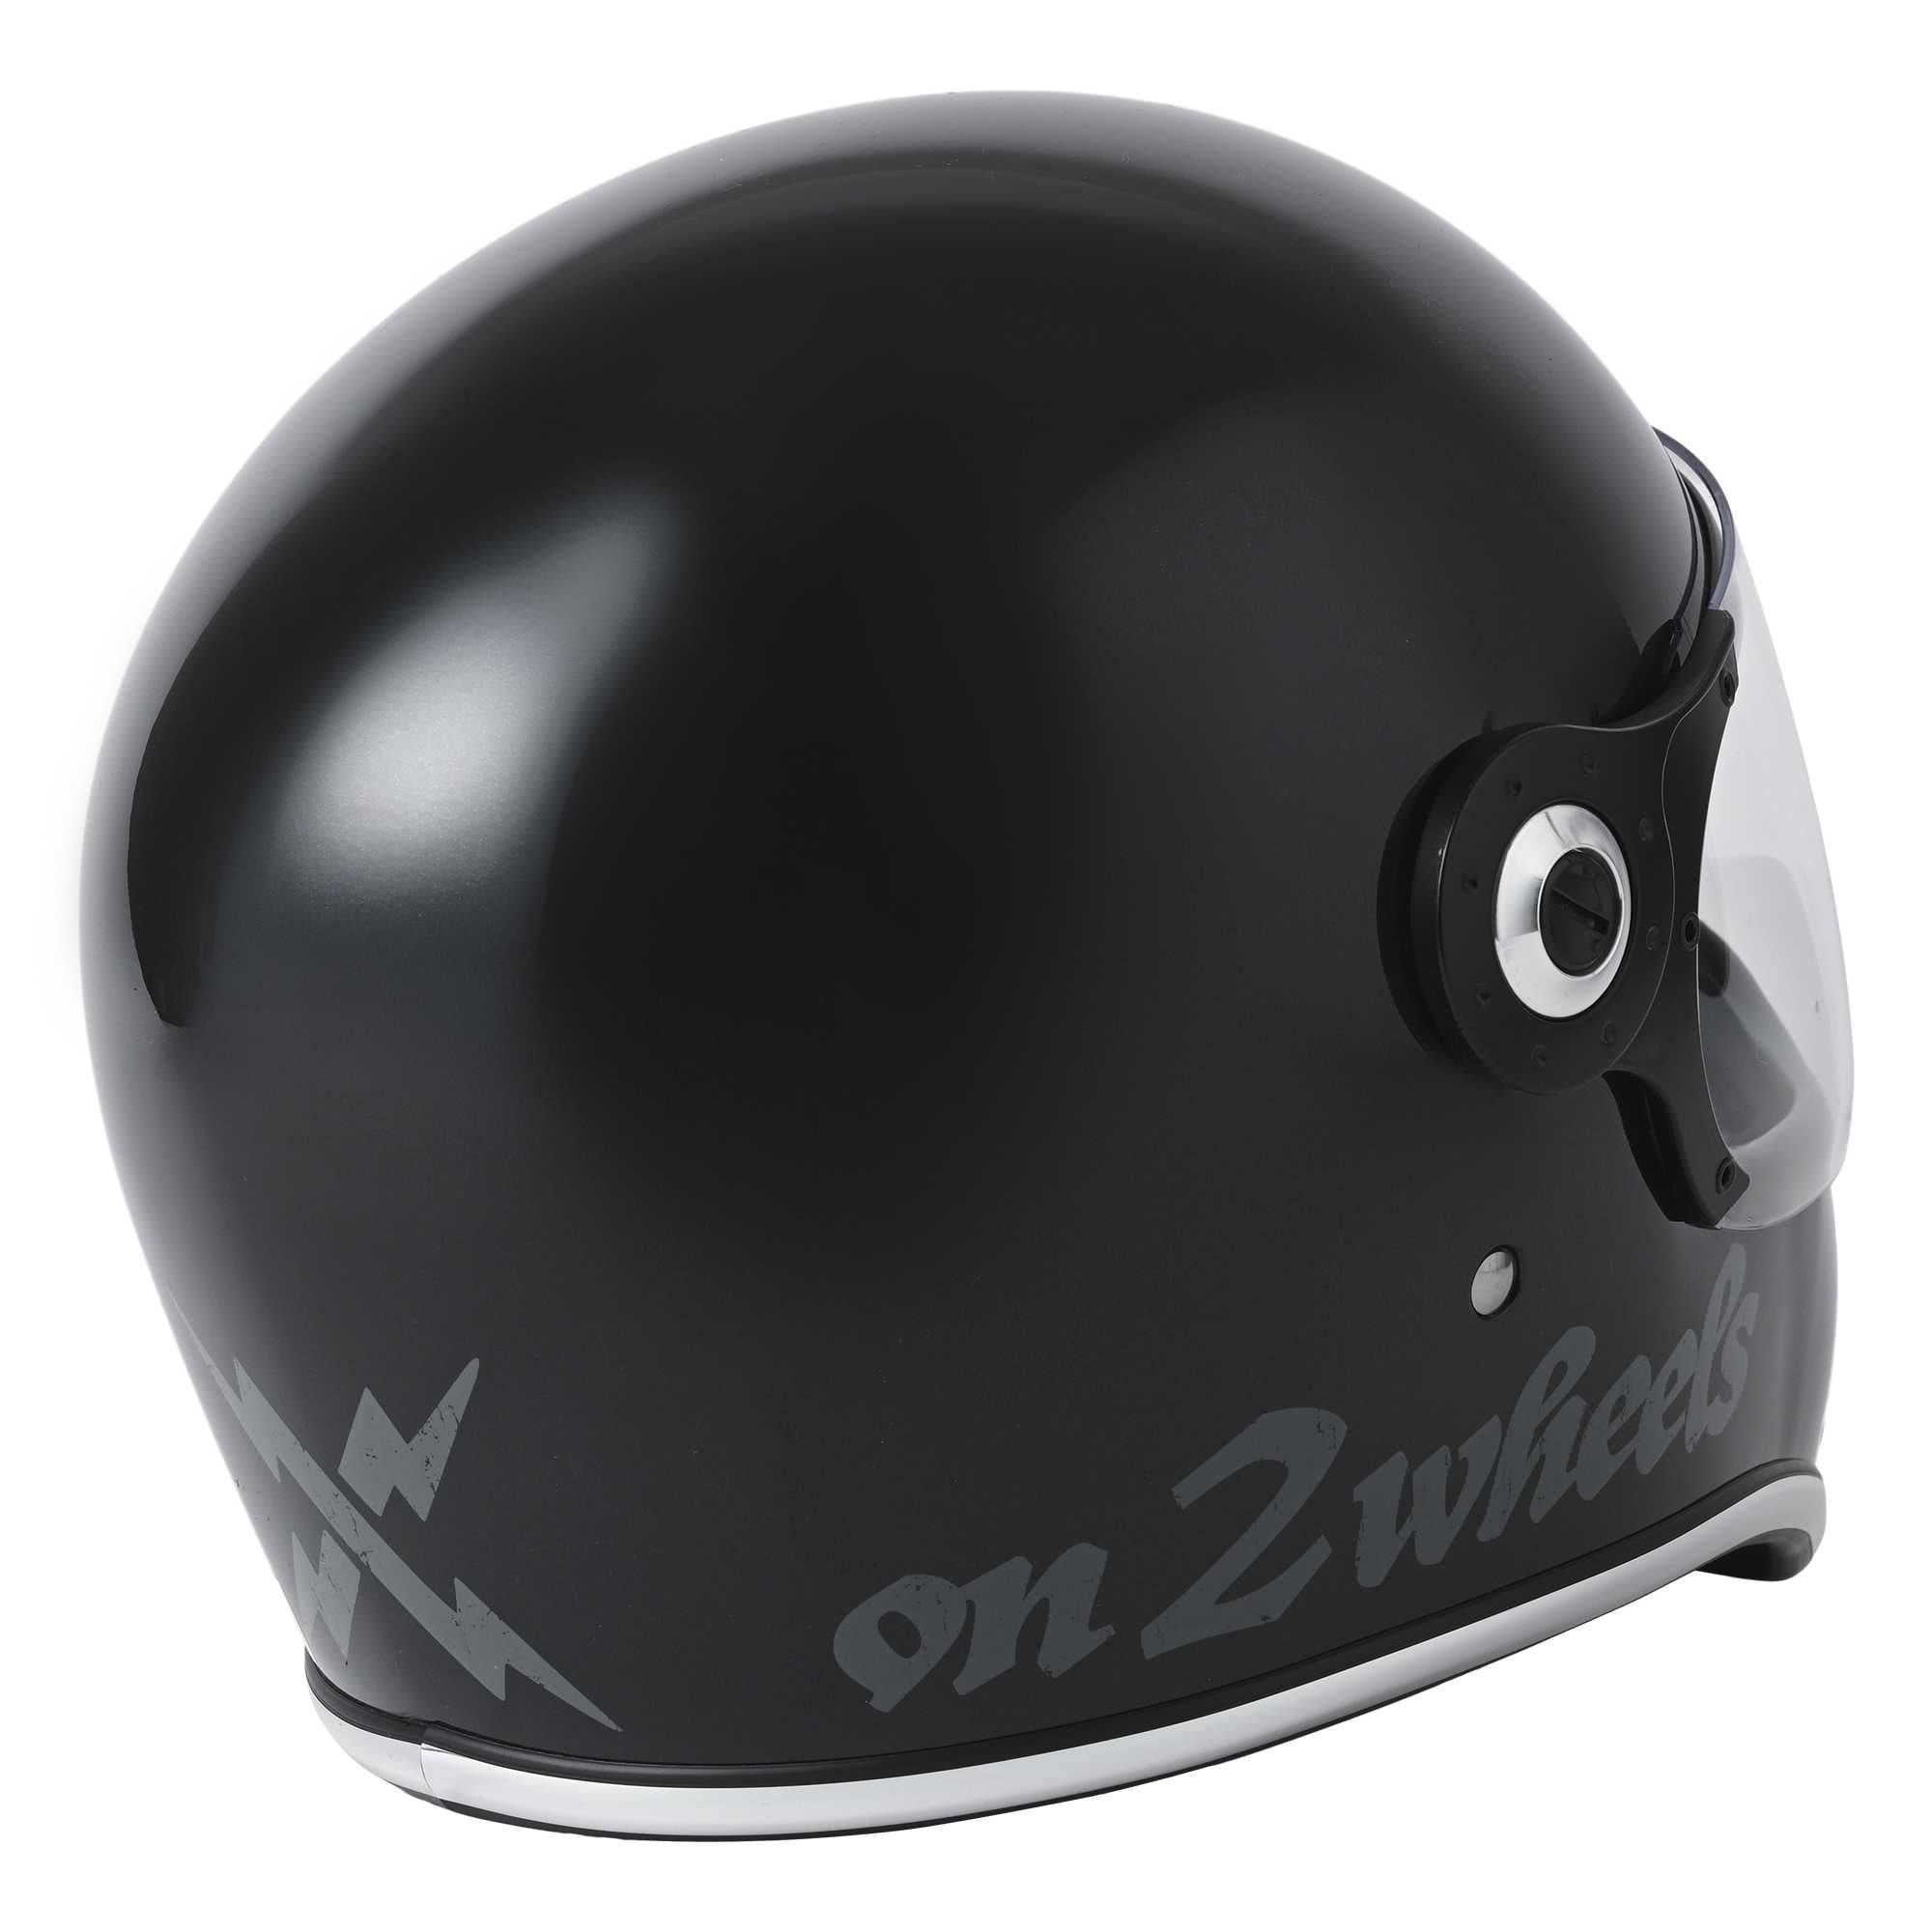 RIDEZ X HELMET Limited Quantity Model 2WHEEL'S LIFE Full Face Motorcycle Helmet 